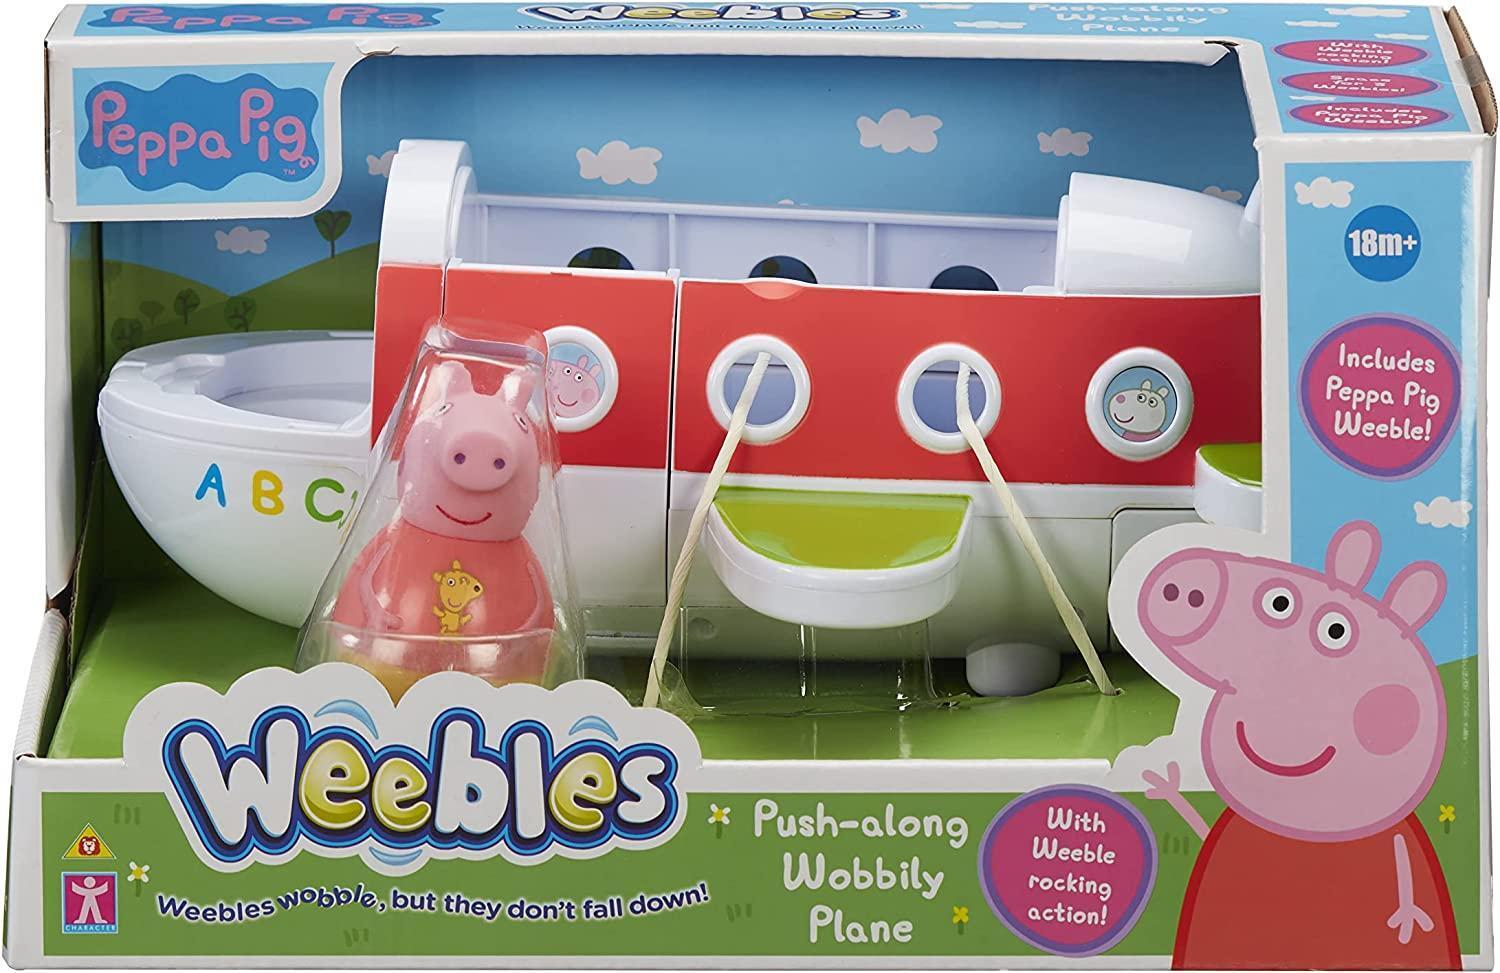 peppa-pig-weebles-push-along-wobily-plane